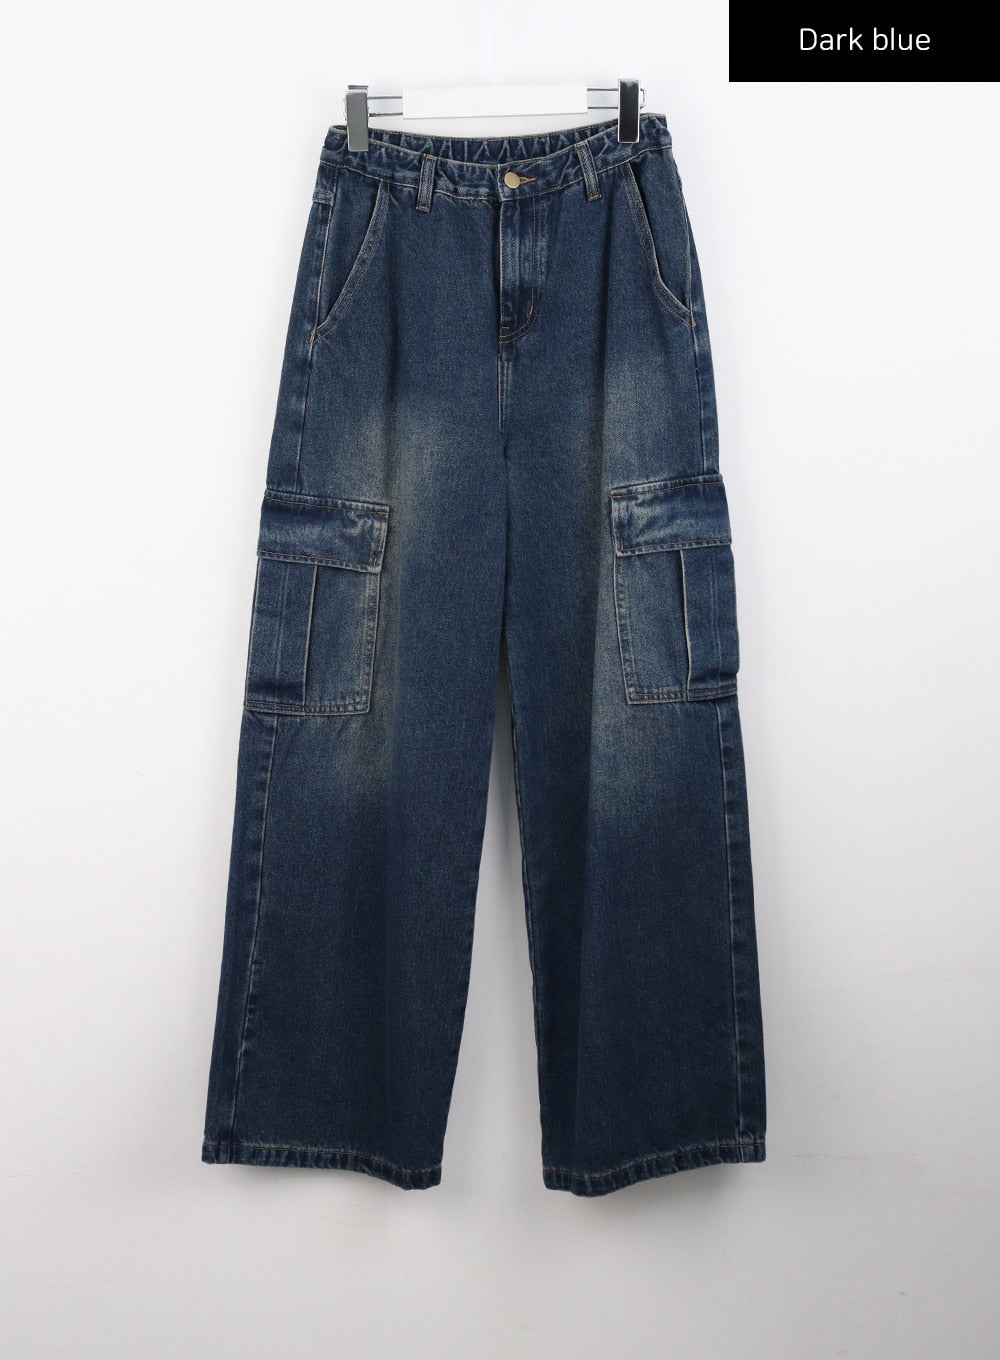 cargo-chic-wide-leg-jeans-cs302